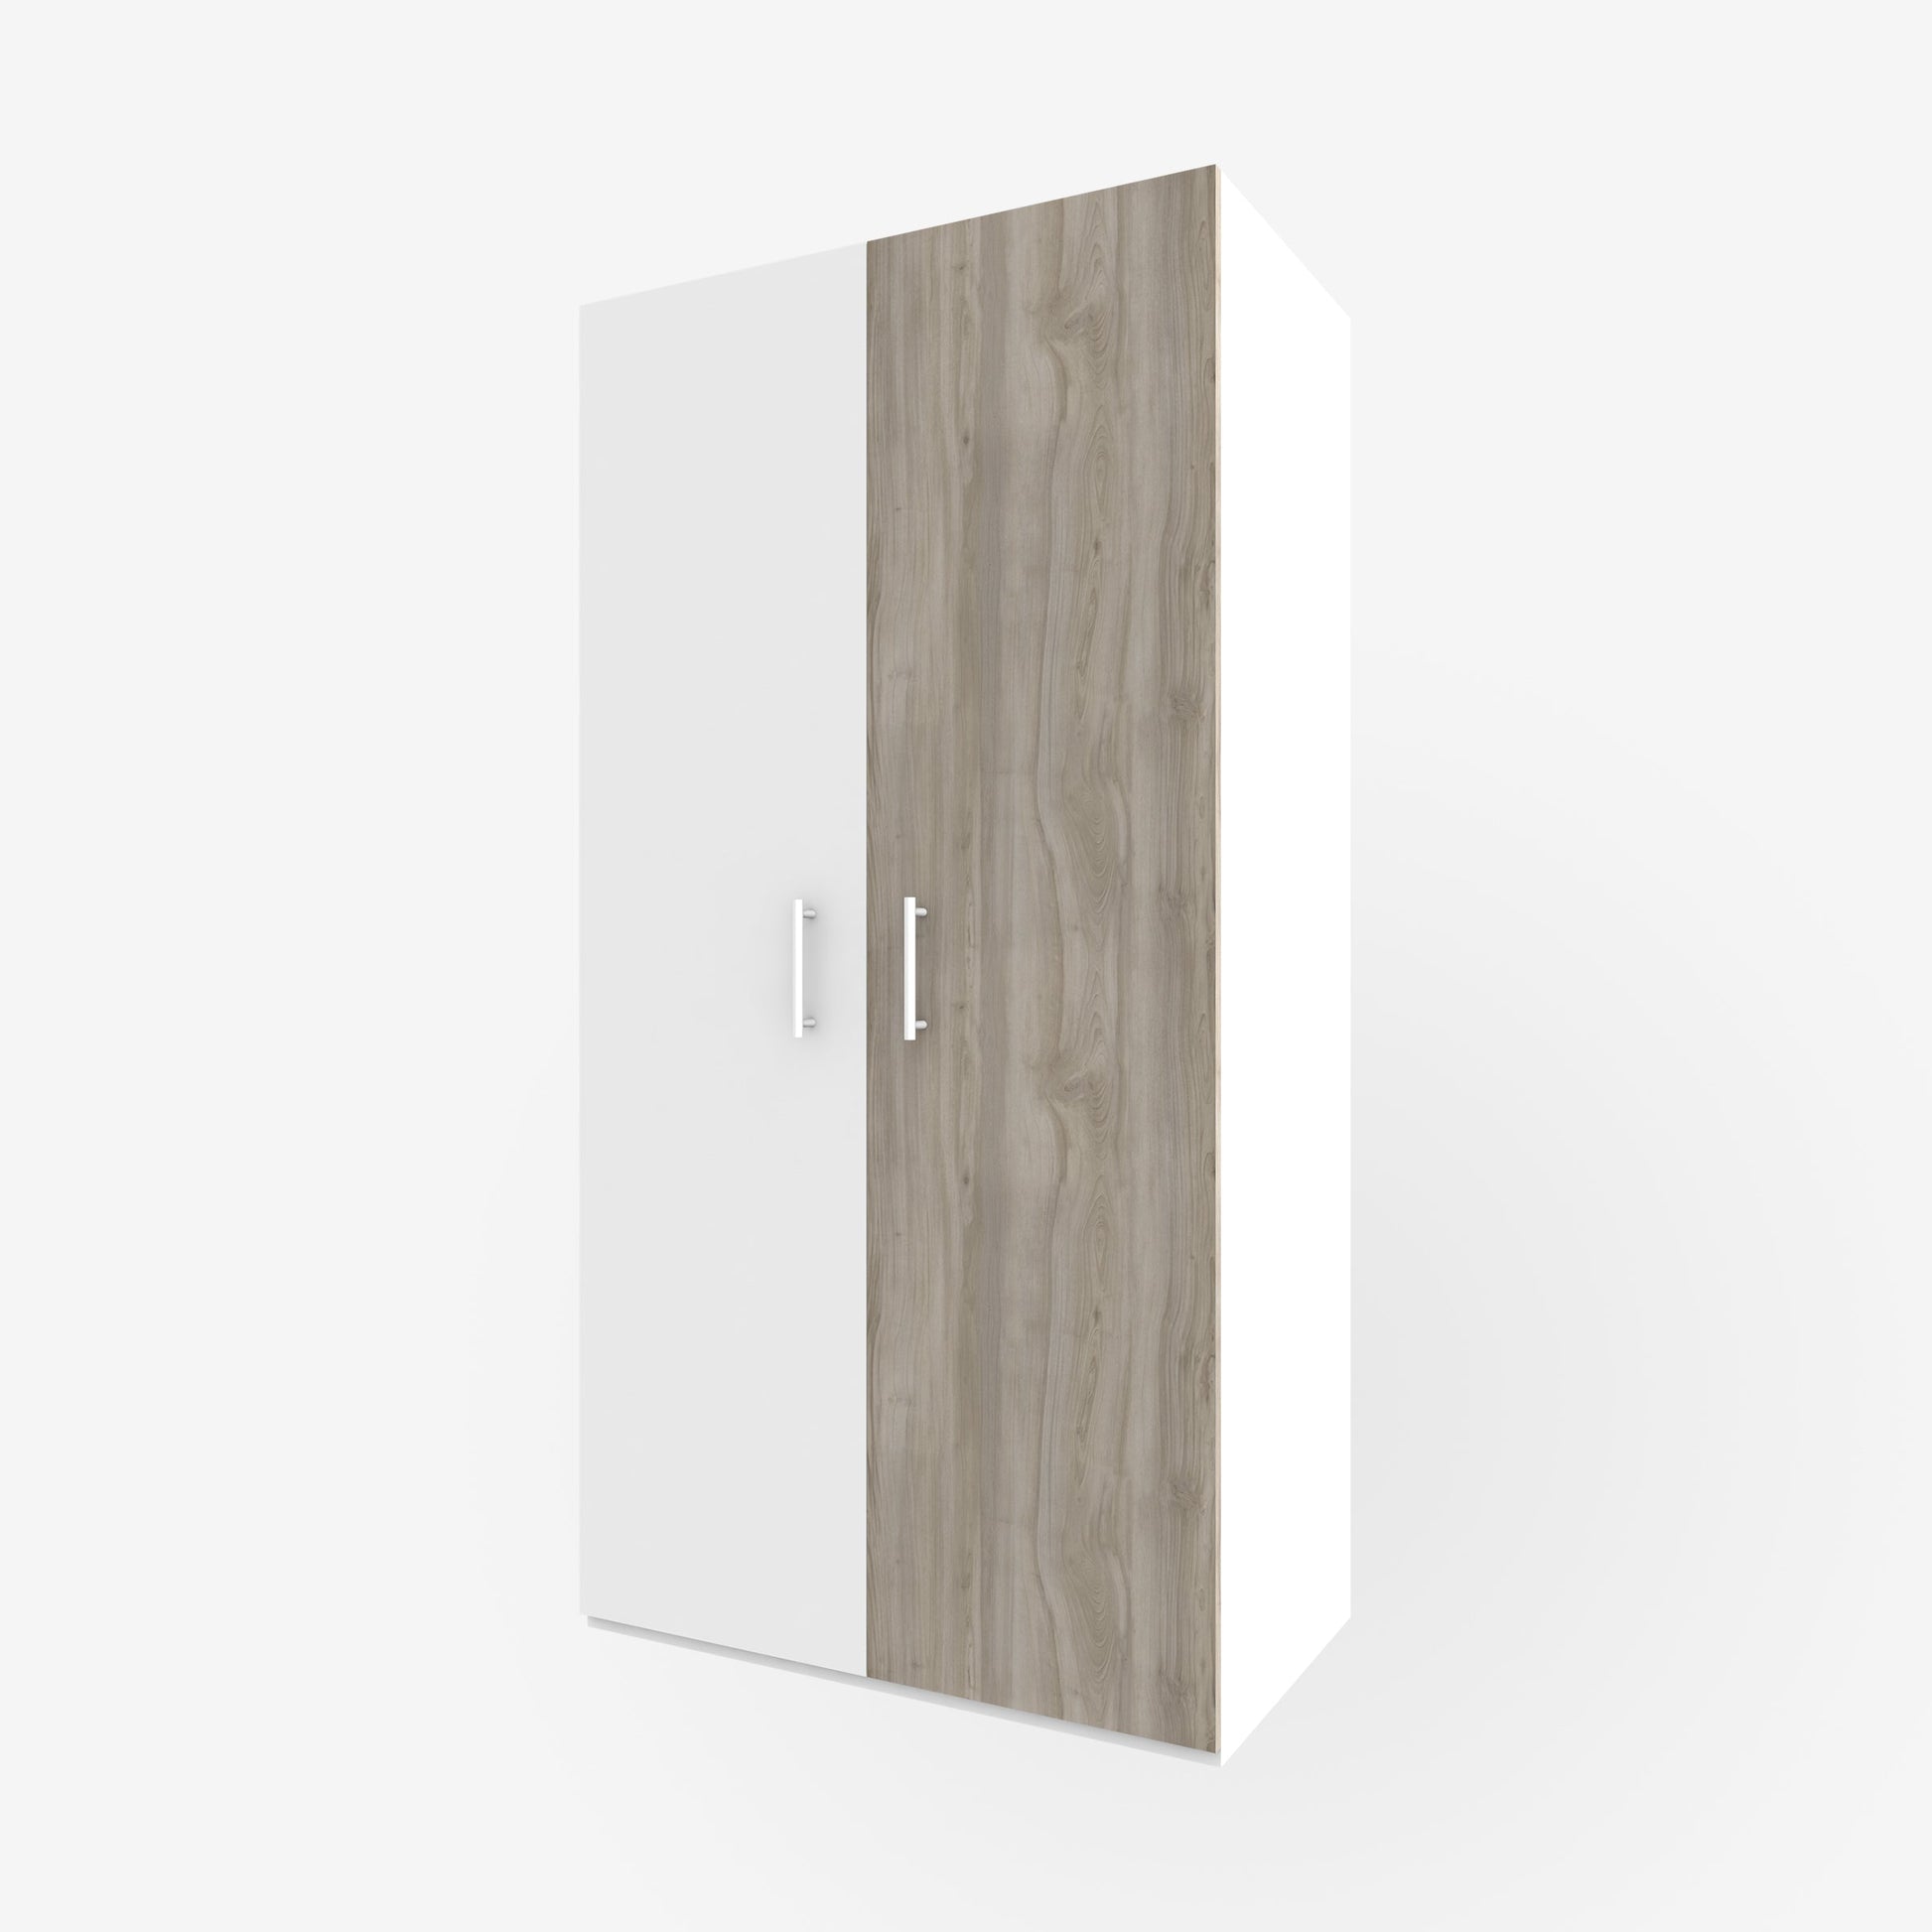 19.5" x 79" light wood tone silverwood slab door for Ikea or Swedeboxx pax closet cabinet